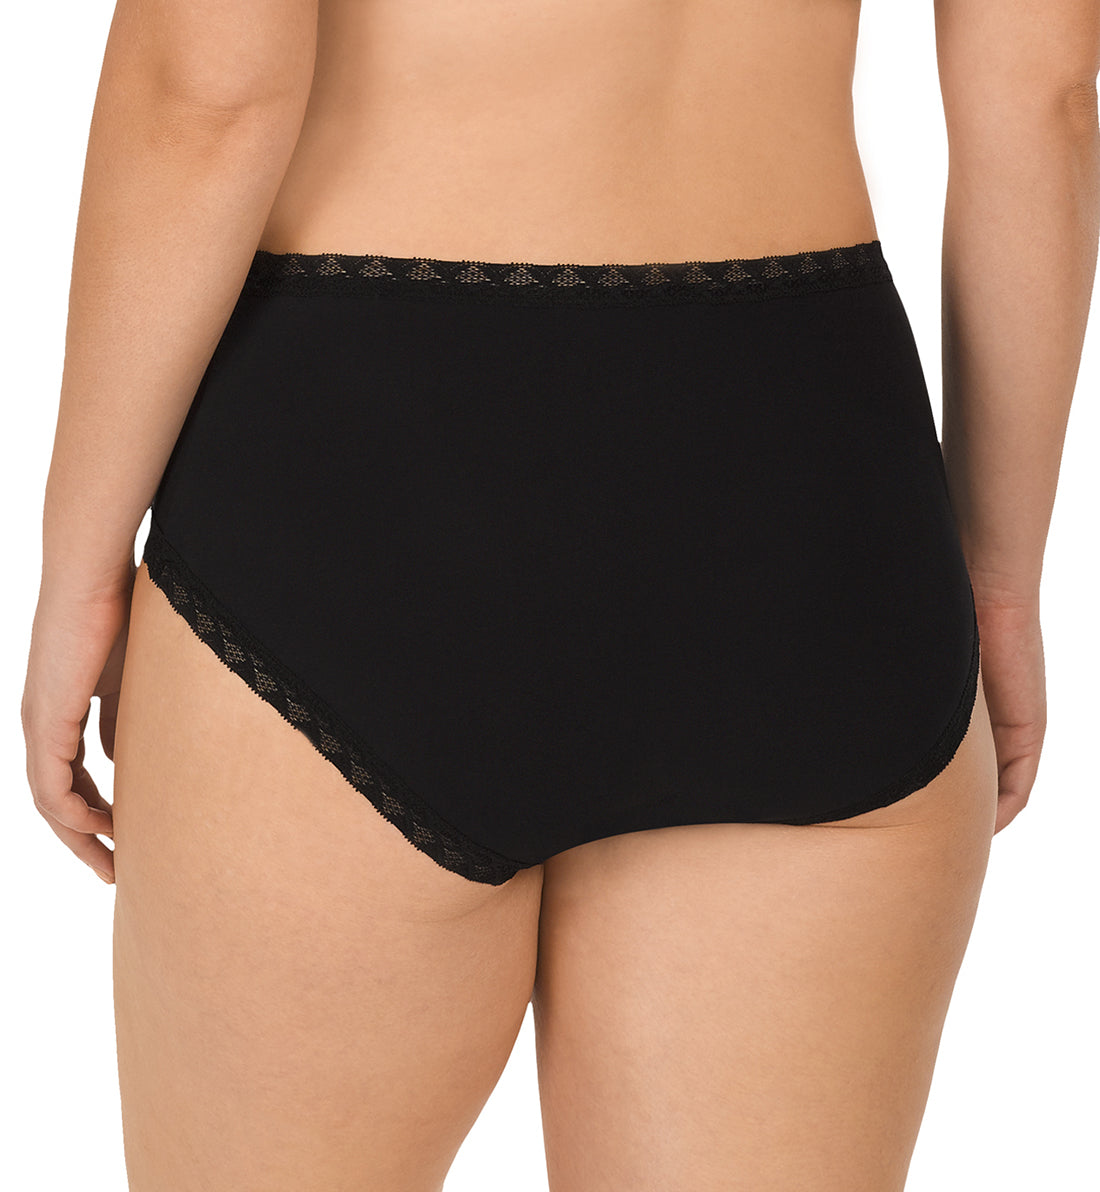 Natori Bliss Full Brief Panty (755058),Small,Black - Black,Small